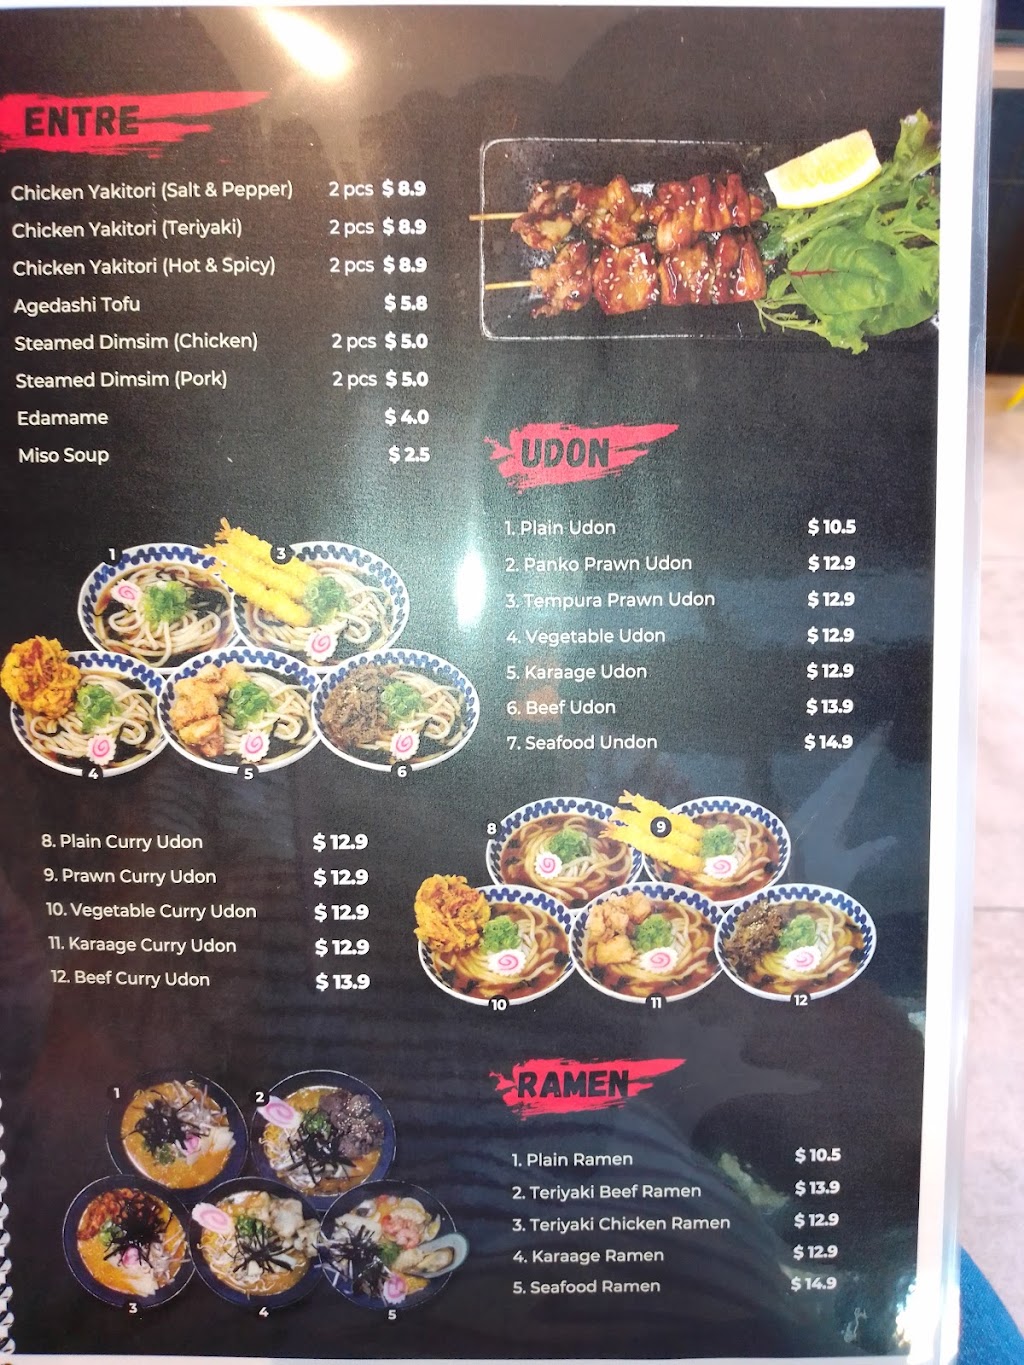 Sushi Soul | restaurant | Shop 1/1 Ardrossan Rd, Caboolture QLD 4510, Australia | 0435817011 OR +61 435 817 011